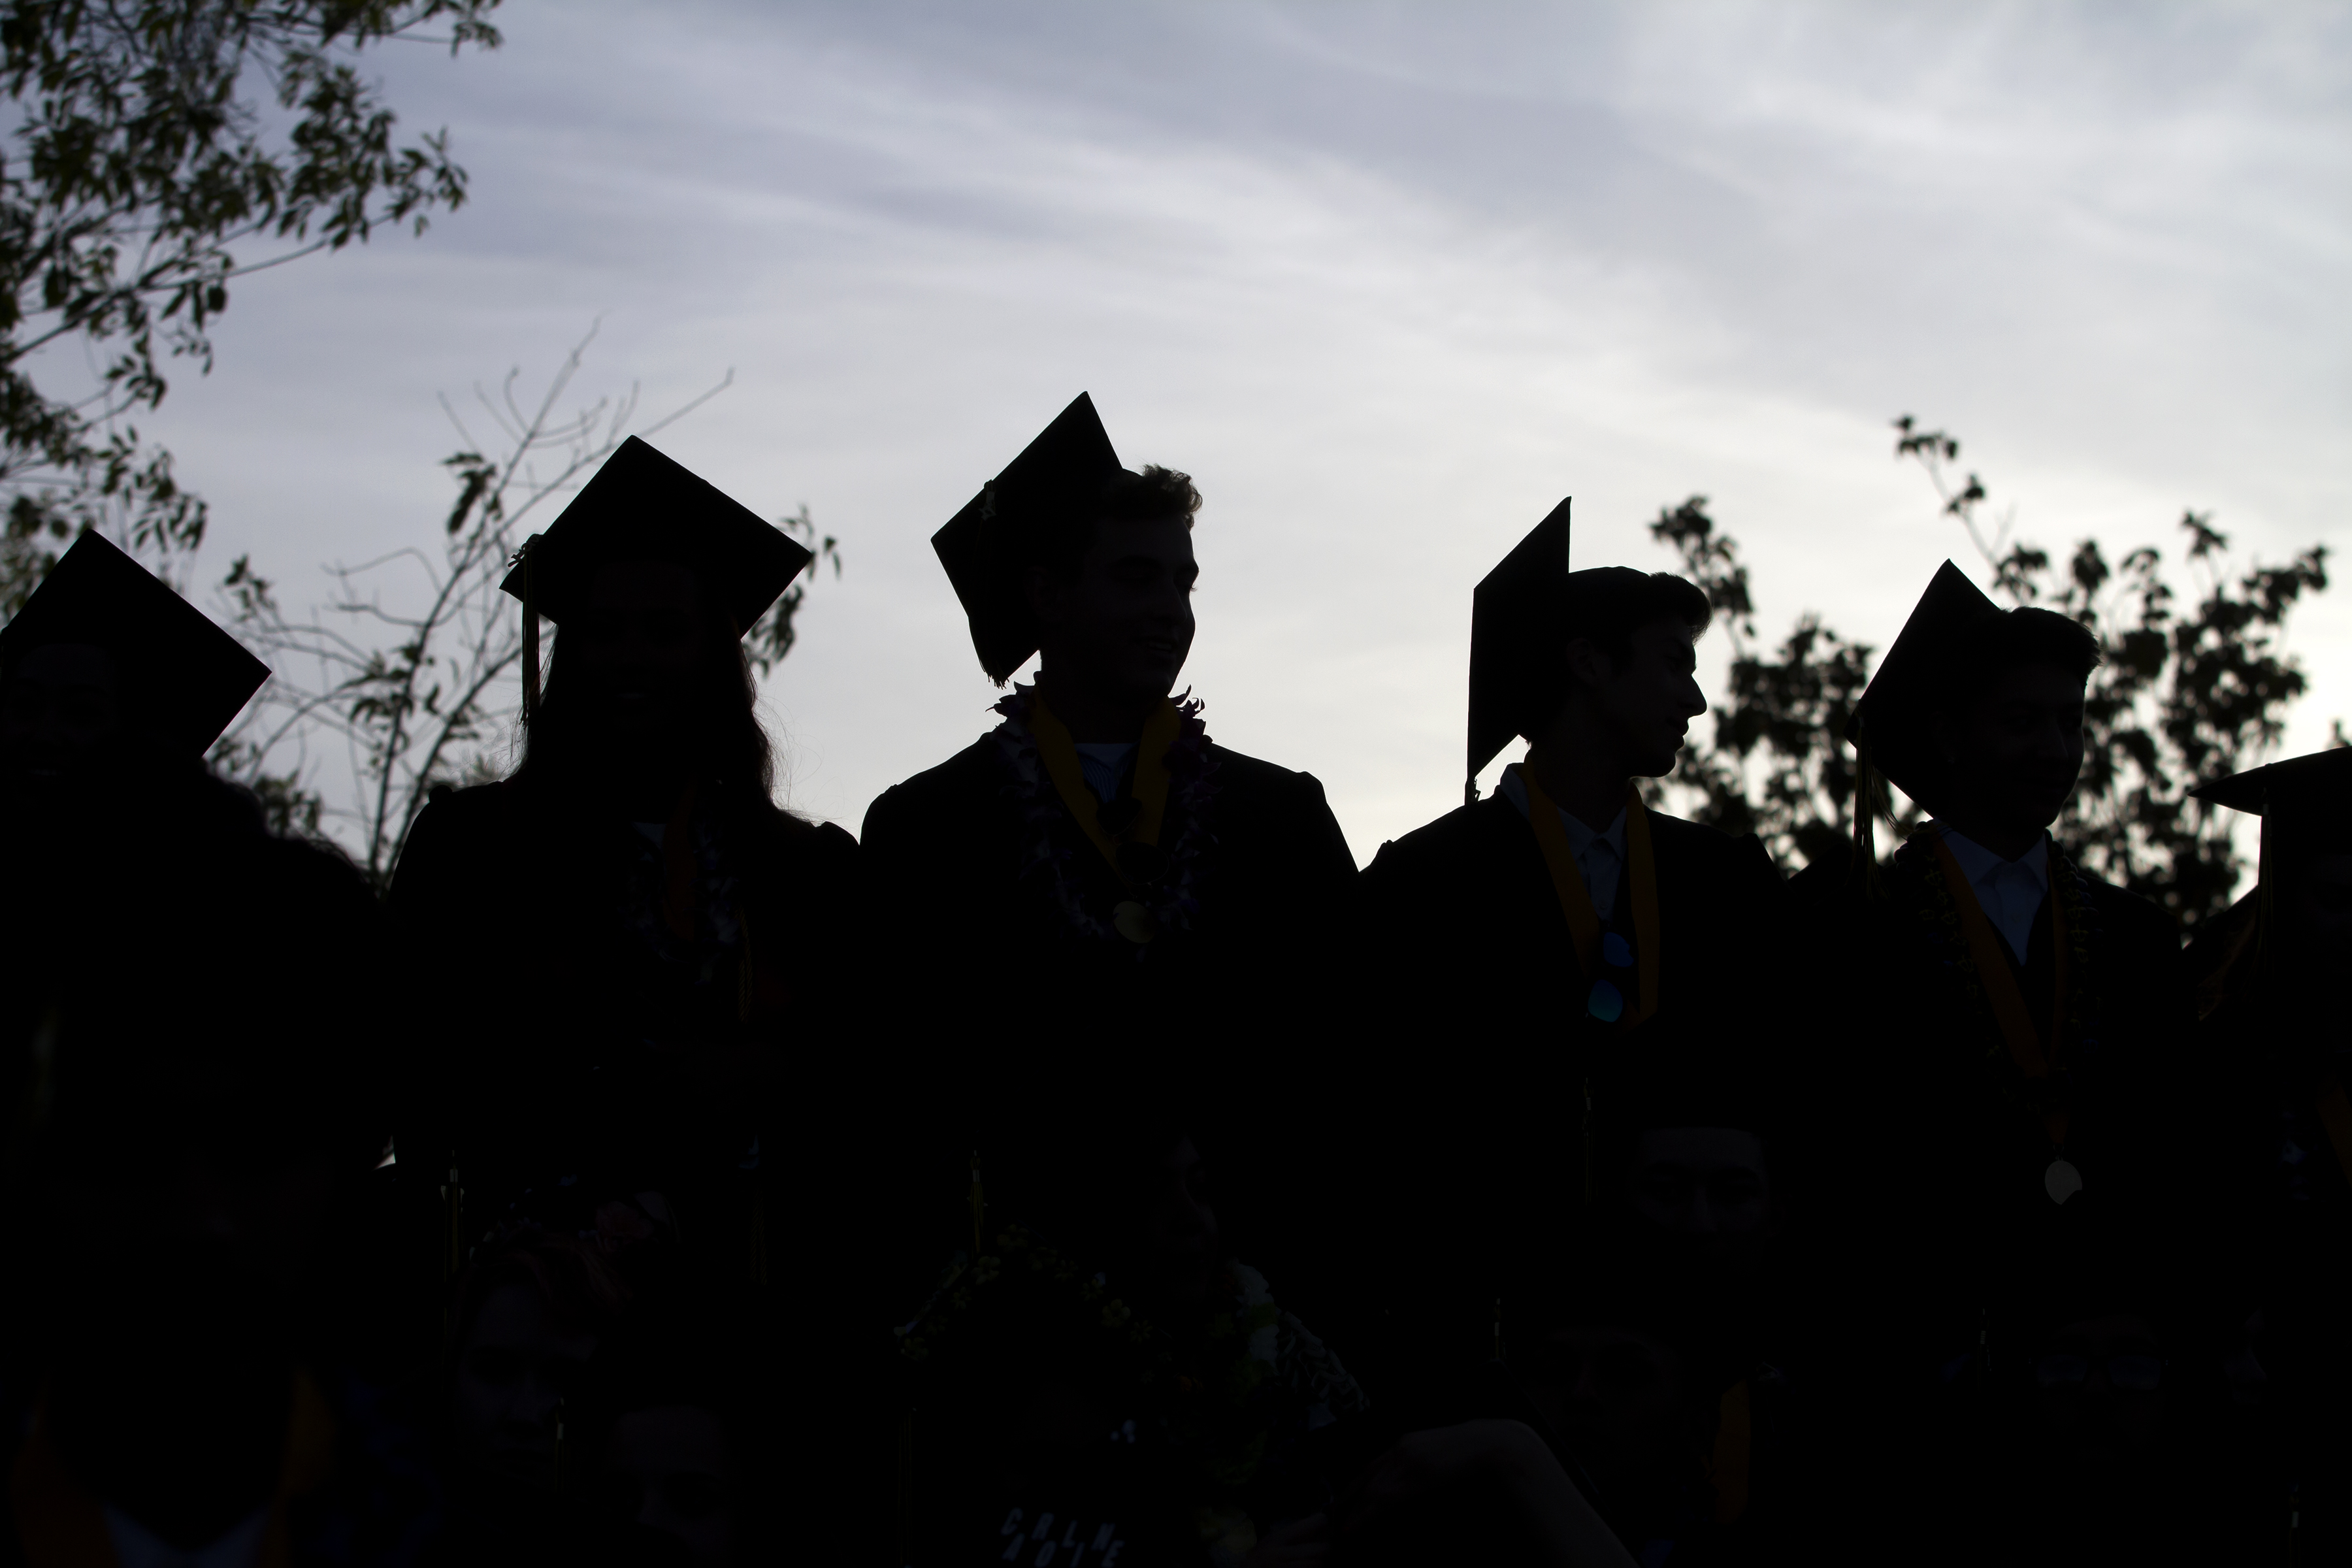 Graduation silhouette